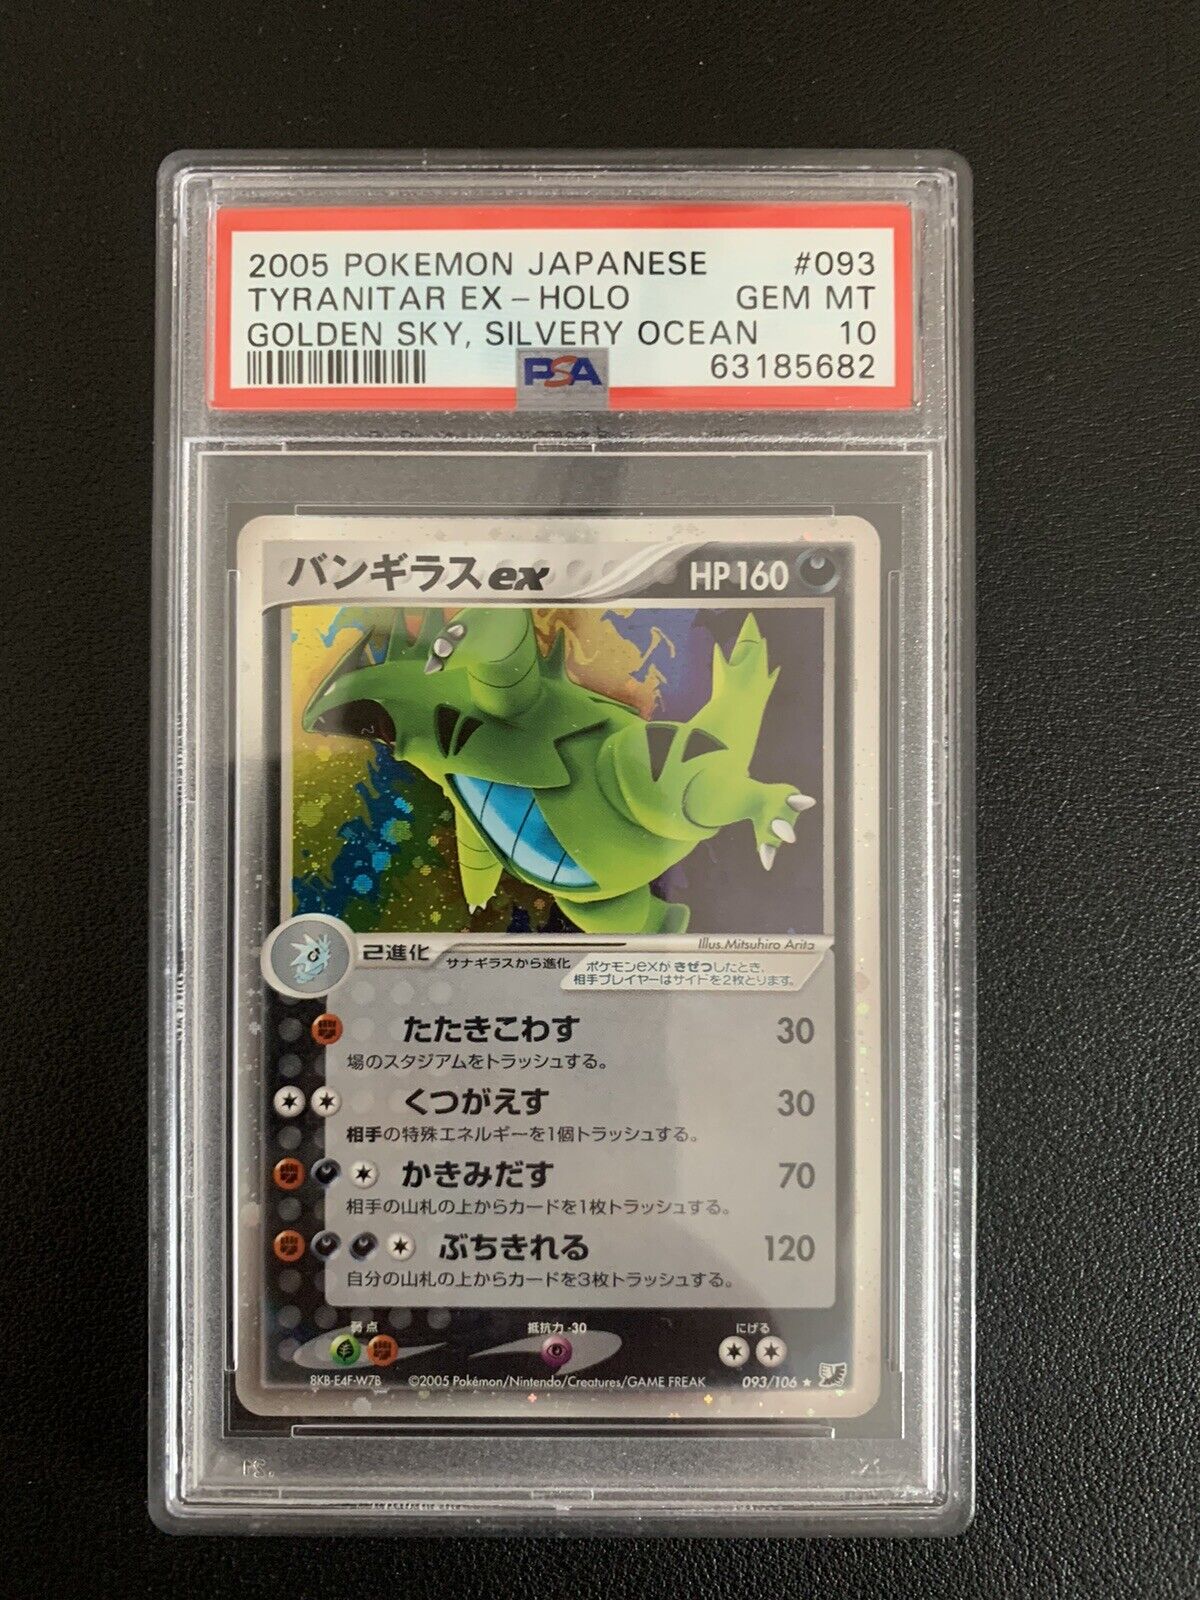 Pokemon Tyranitar ex Golden Sky Silvery Ocean Japanese Unseen Forces #093 PSA 10